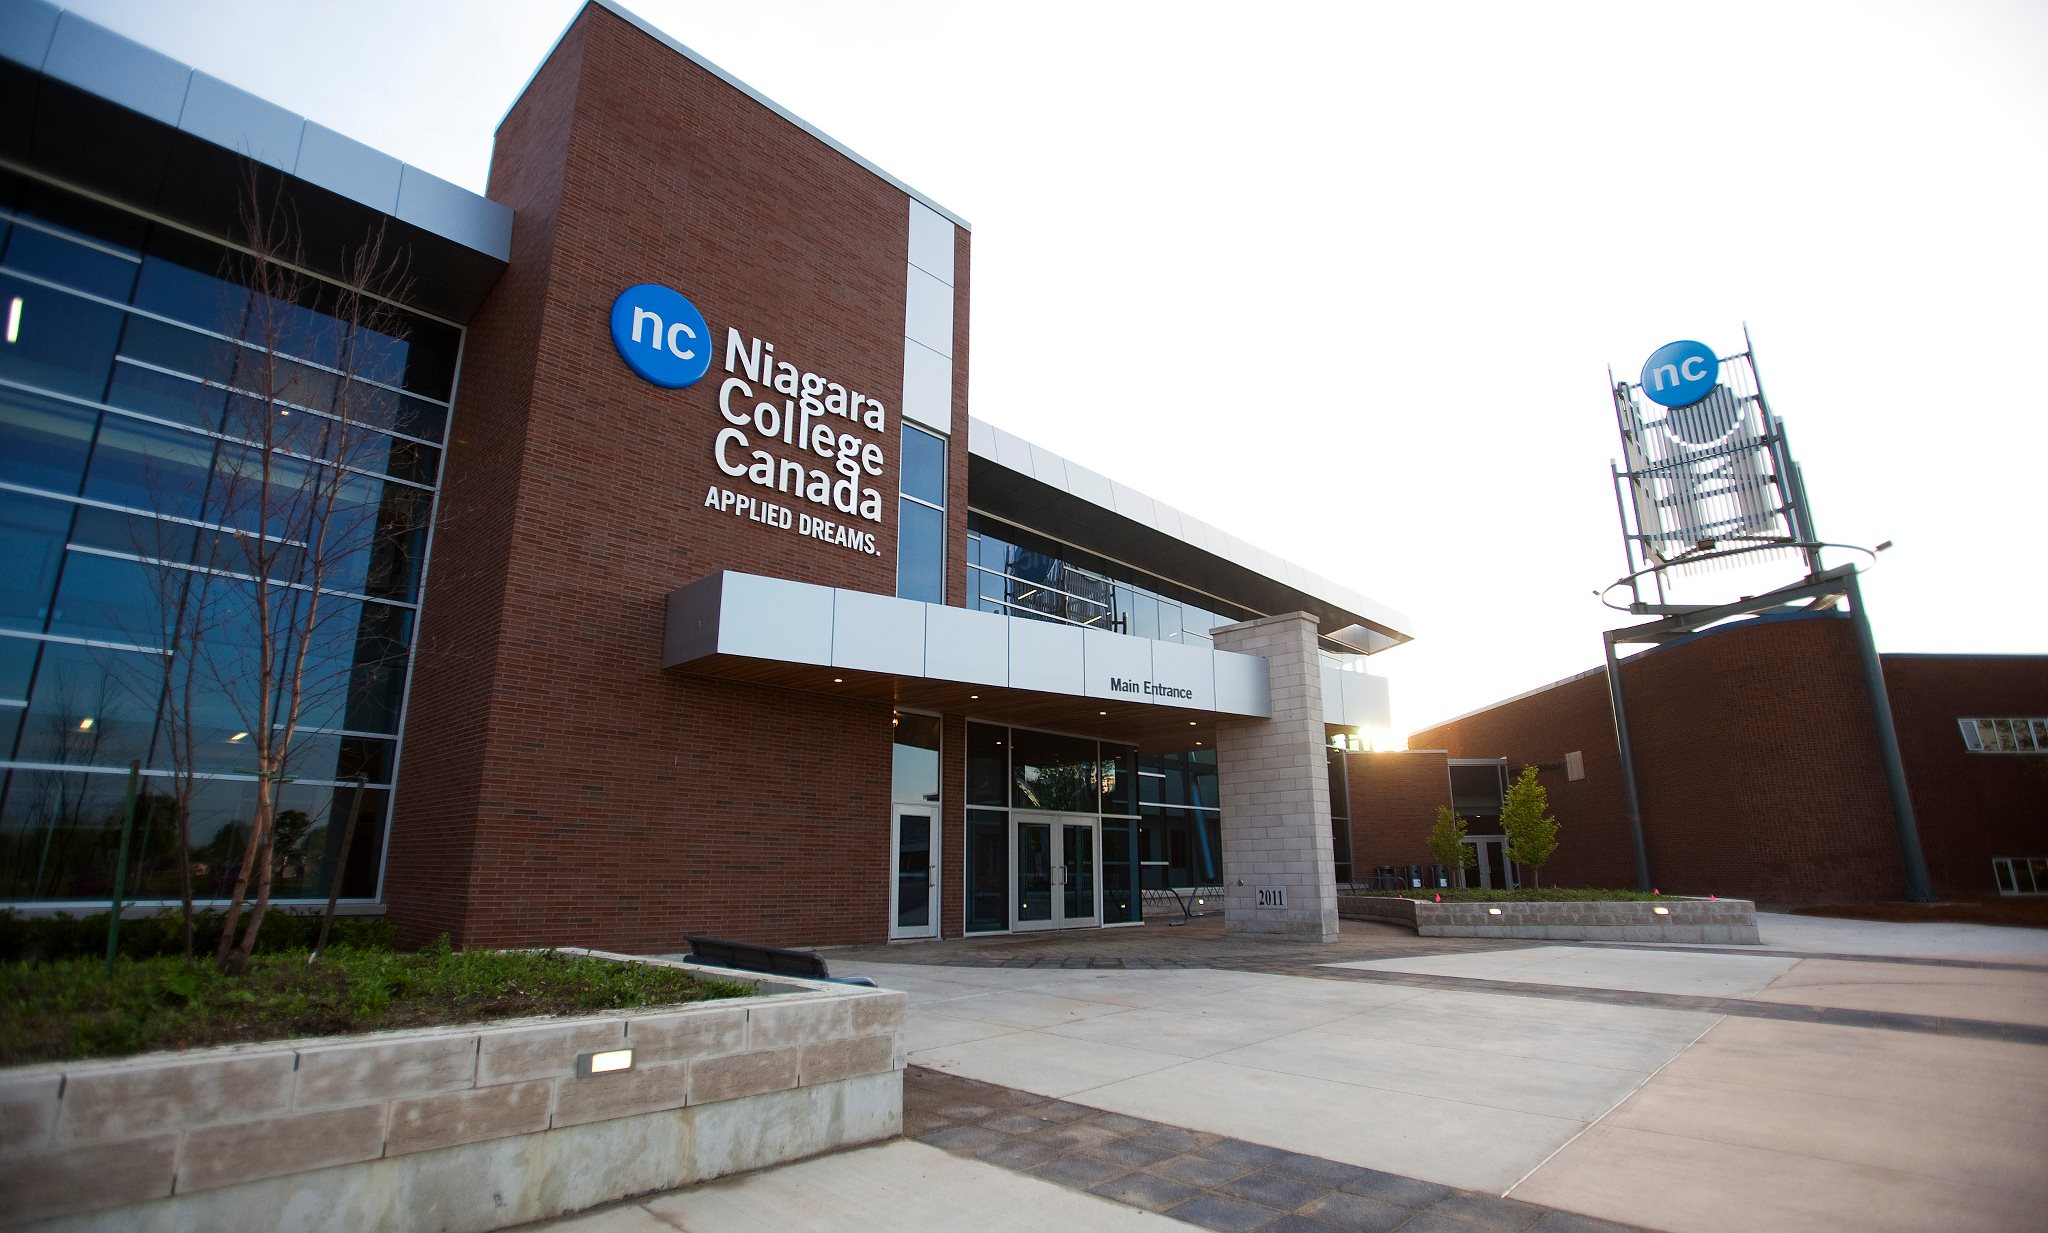 كلية نياجرا – Niagara college of Canada